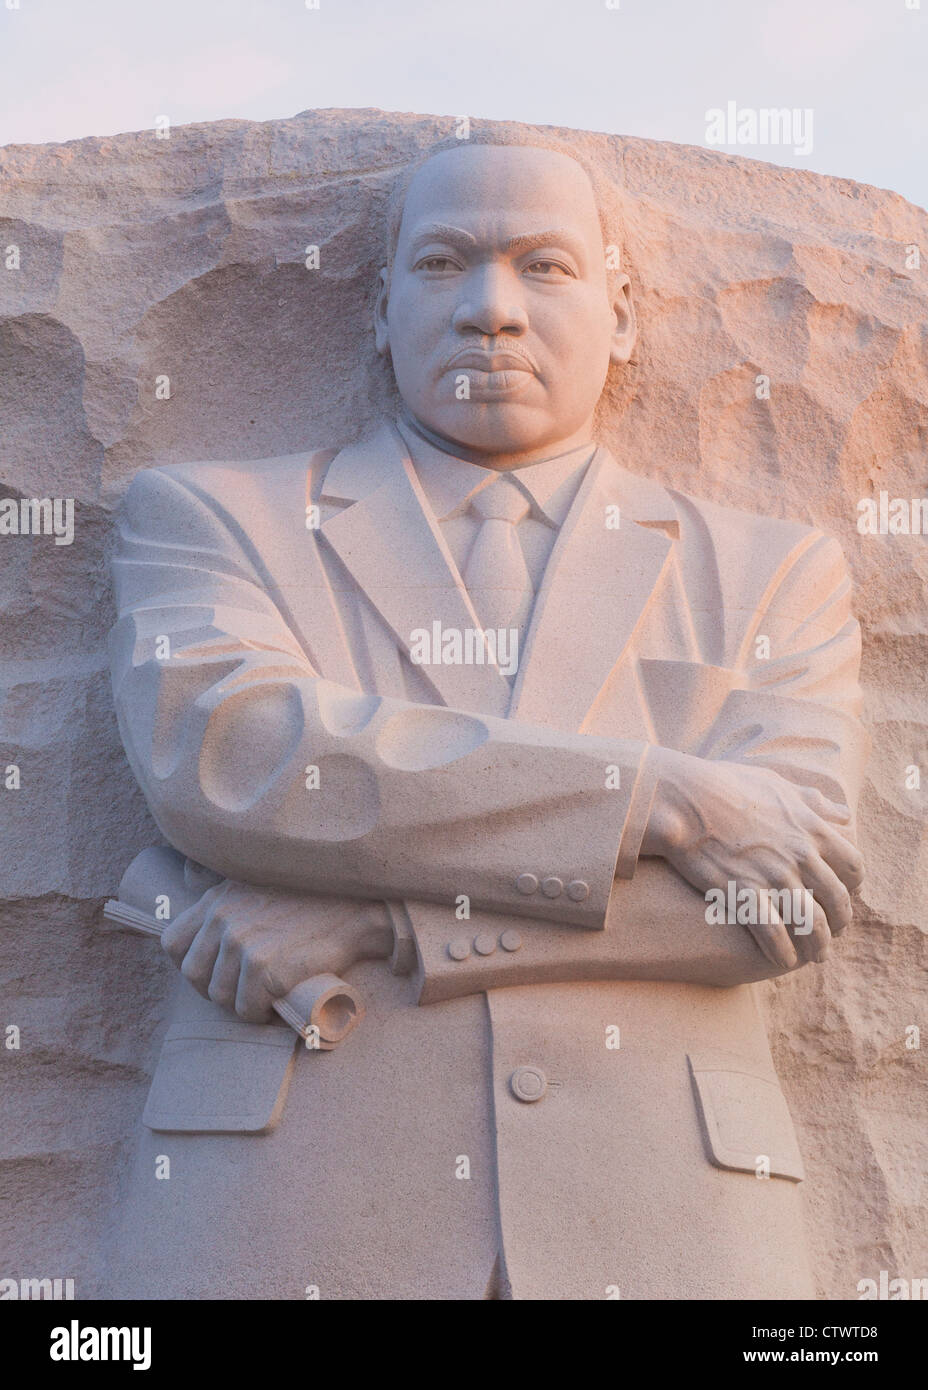 Martin Luther King Jr memorial sculpture libre - Washington, DC Banque D'Images